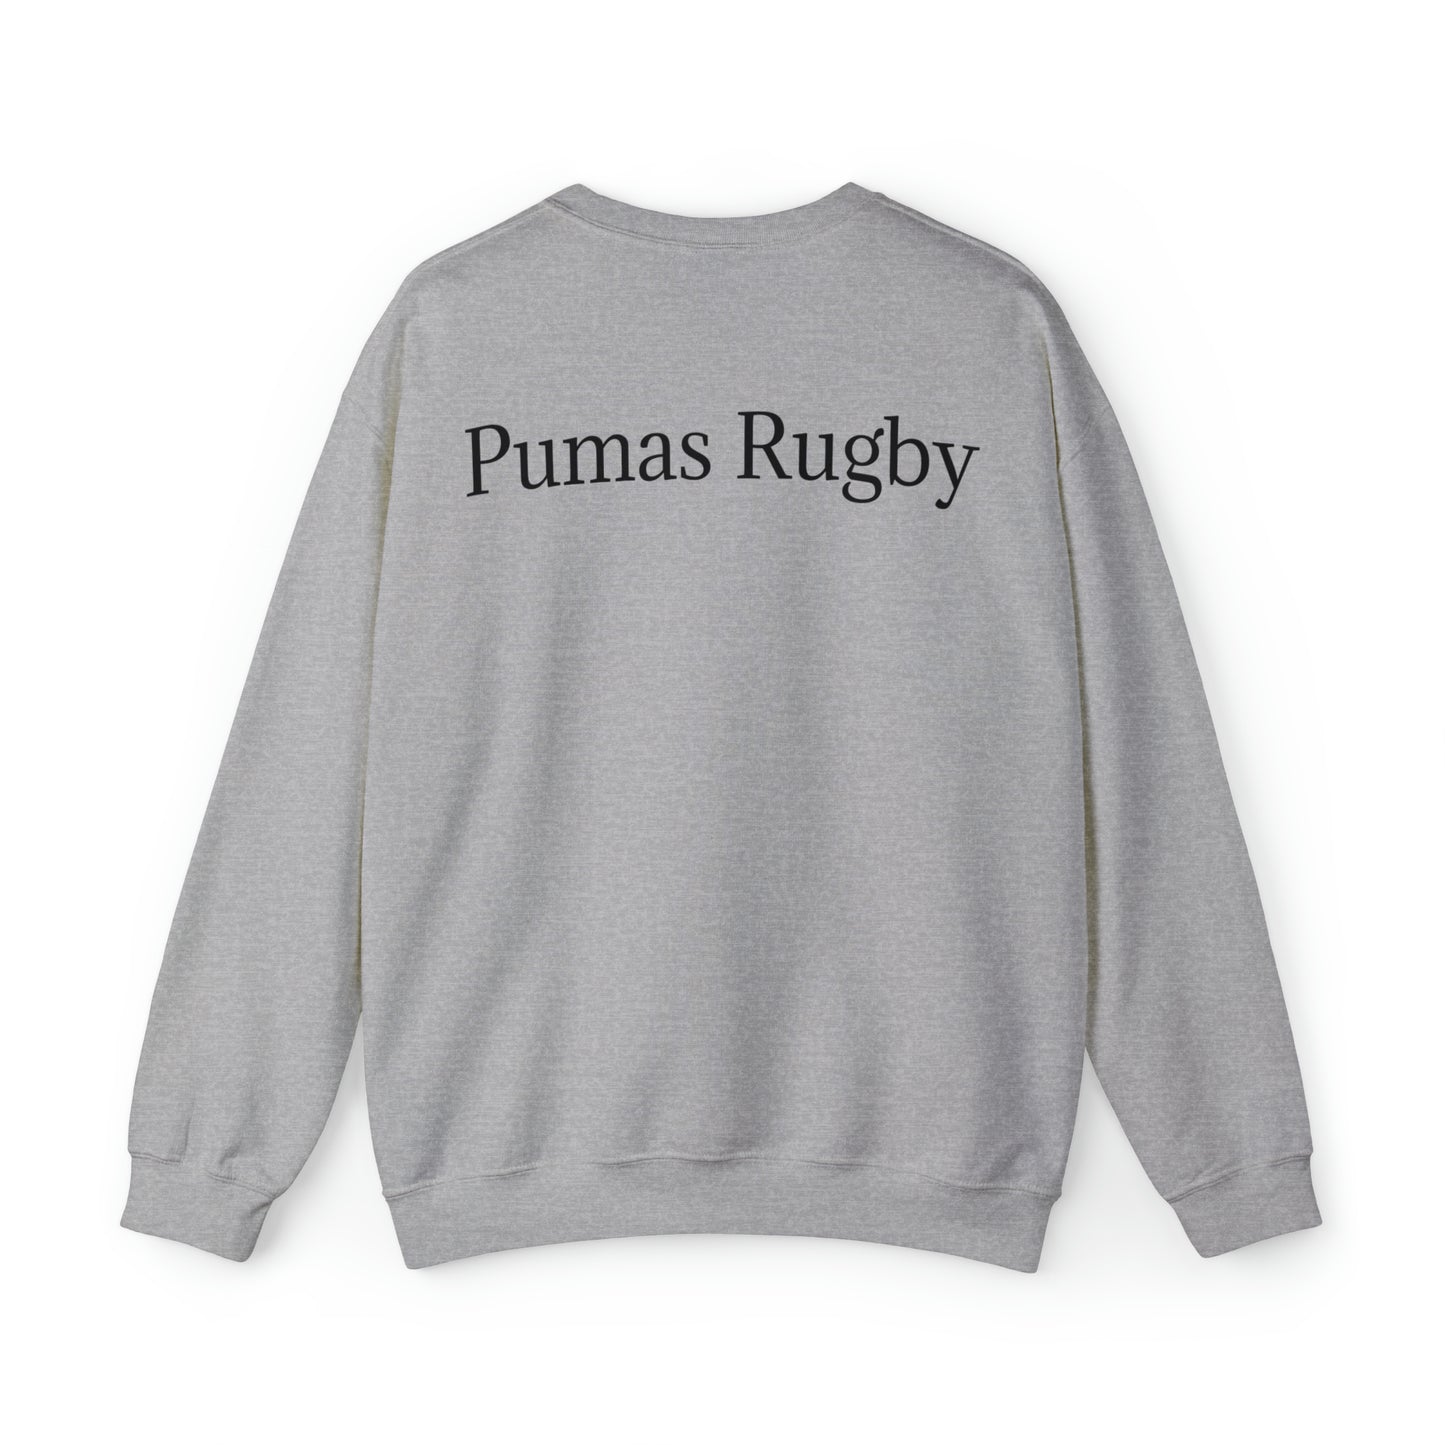 Pumas with RWC - light sweatshirts